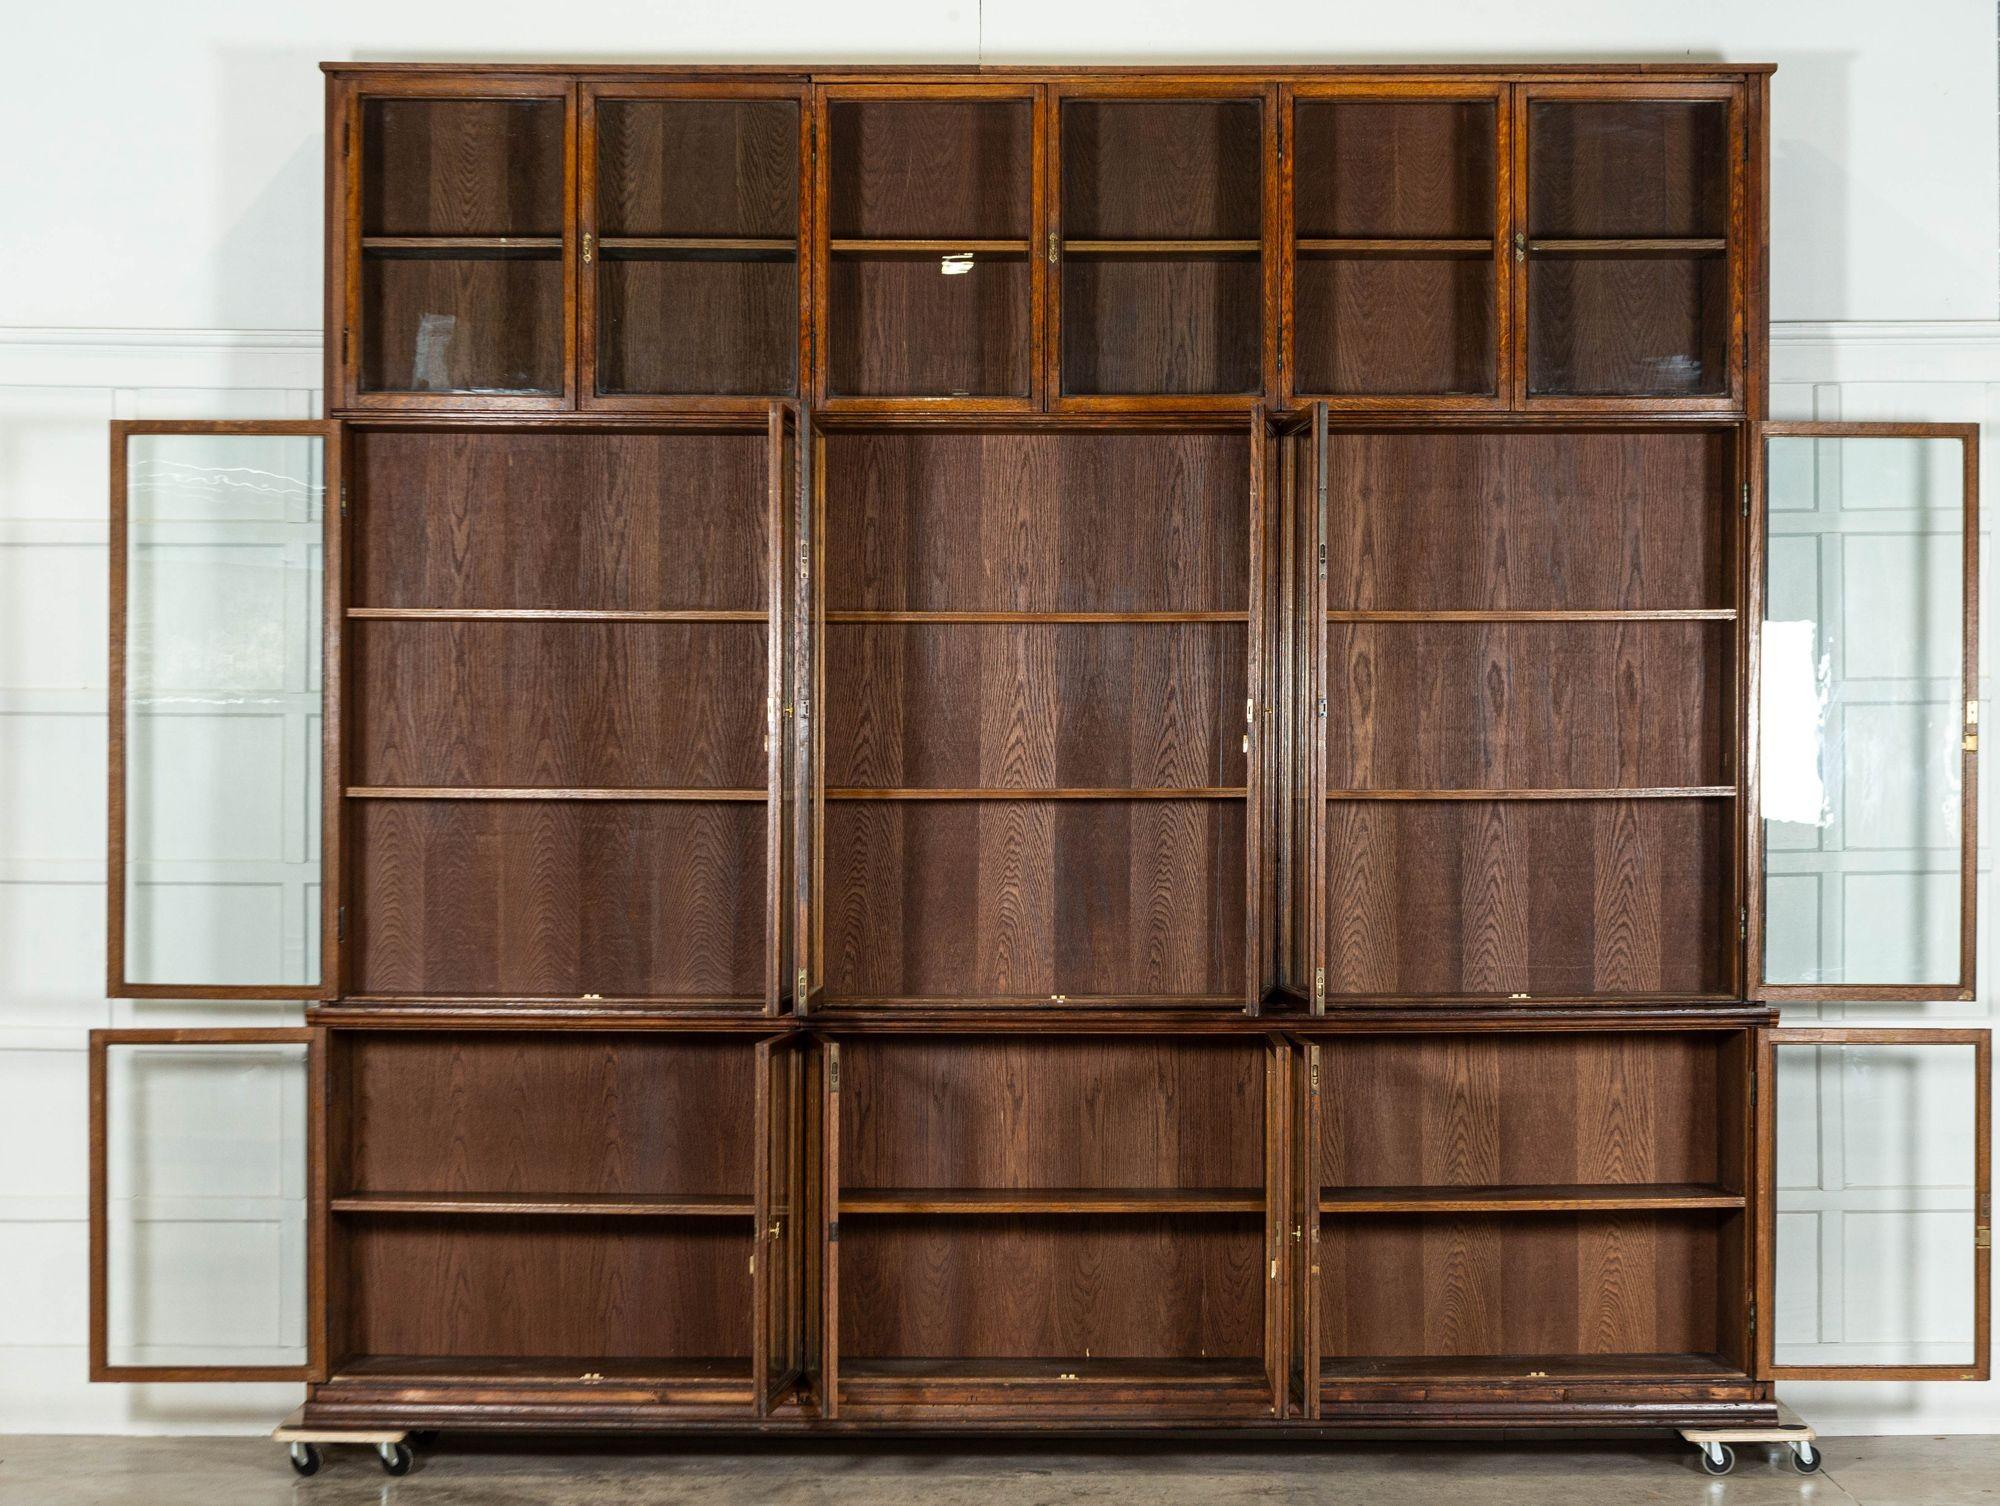 circa 1890
Monumental Oak Glazed Haberdashery Bookcase Cabinet
Provenance: St James's, London.
An exceptional example
sku 1788B
Base W332 x D47 x H94 cm
Top W334 x D37 x H216 cm
Together W334 x D47 x H310 cm
Weight 237 kg